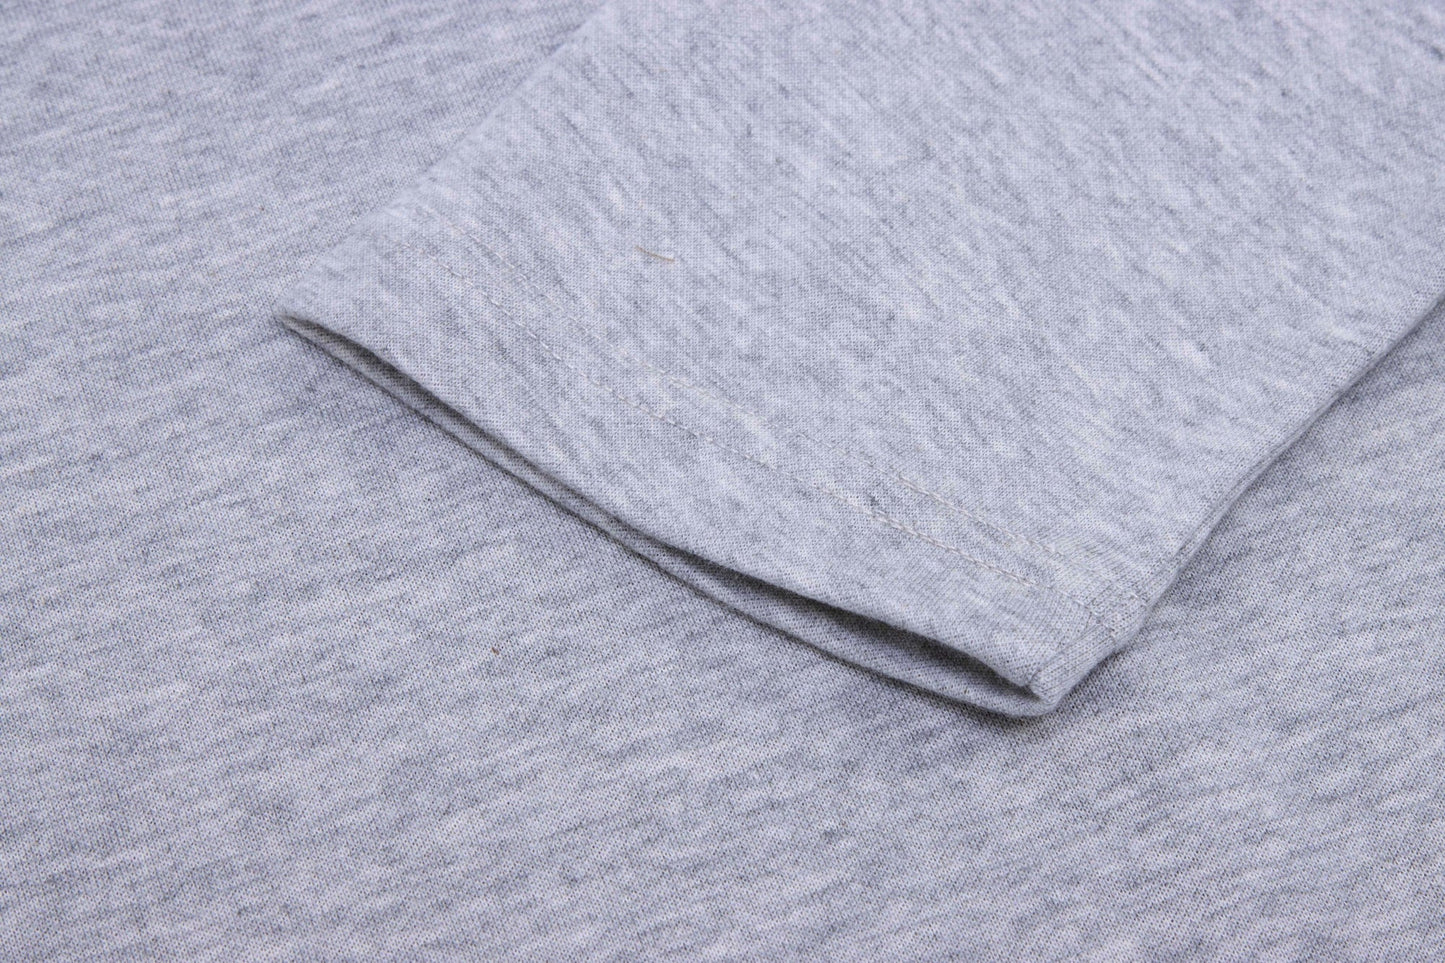 Men's EMF-Shielding Long Sleeve